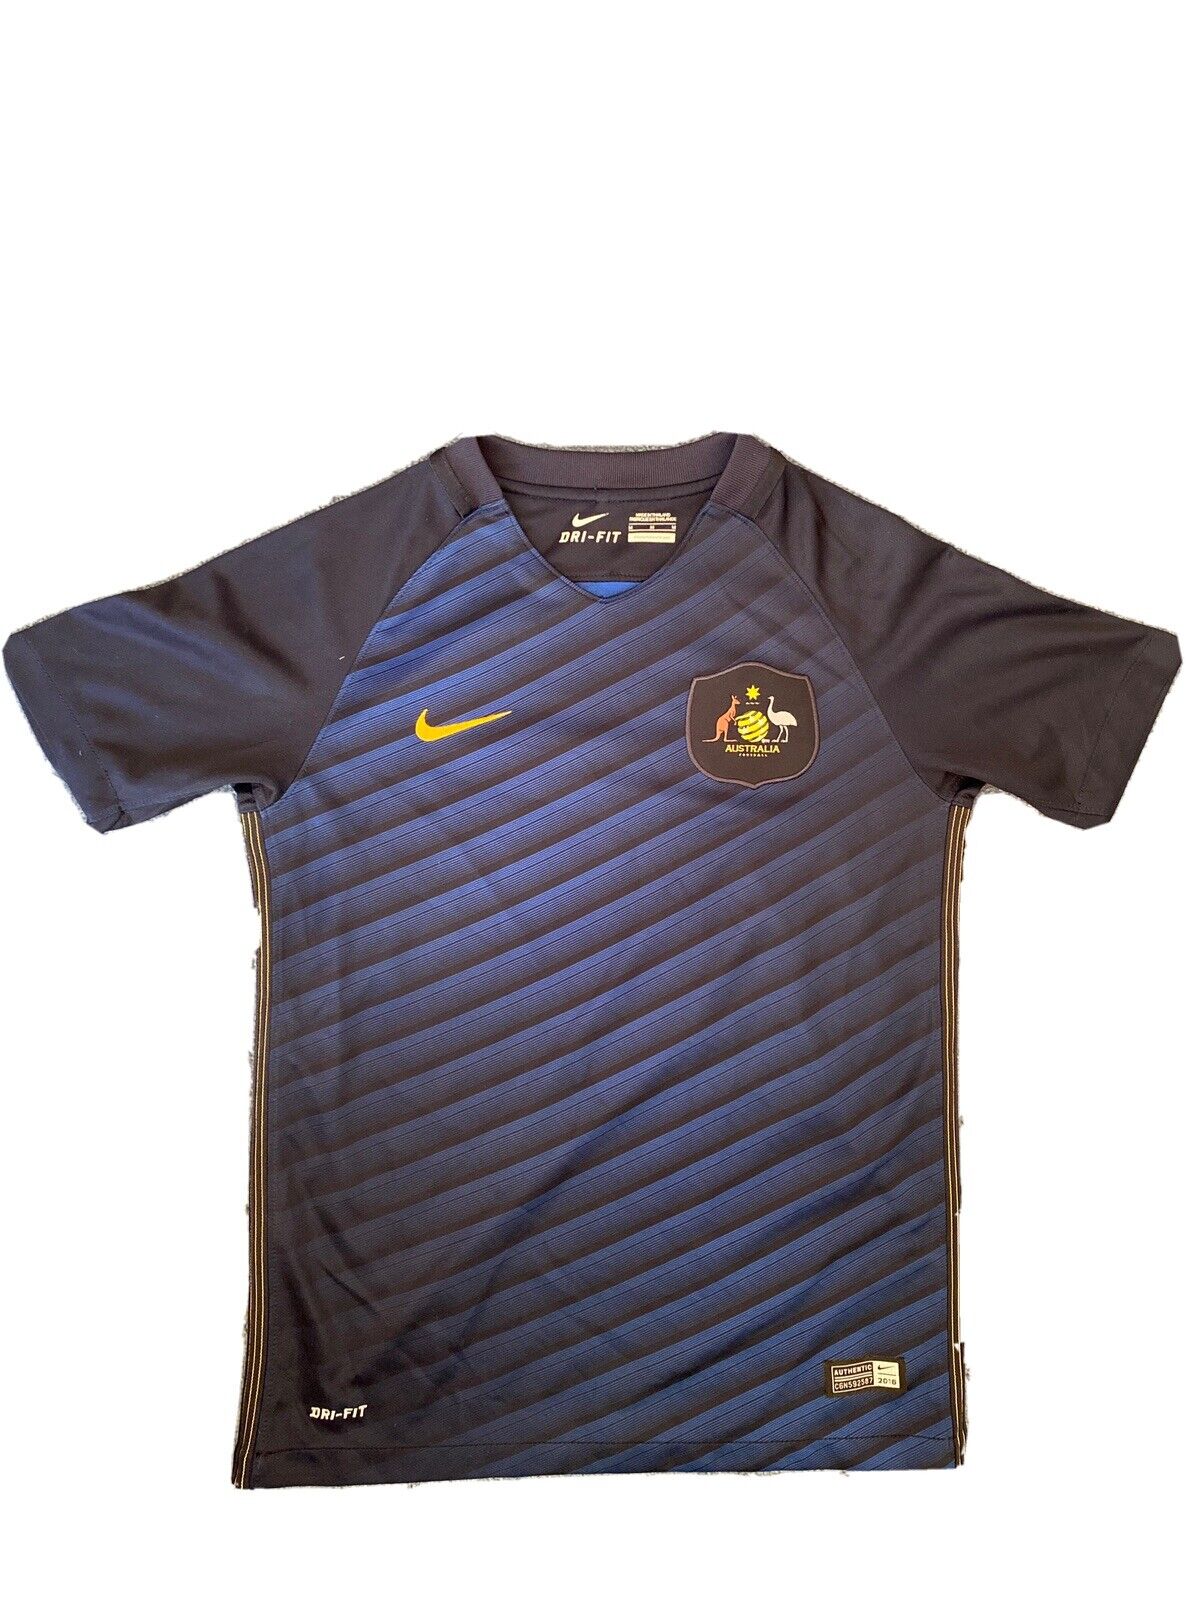 Limited Edition Nike 2016 Australian Football Shirt 